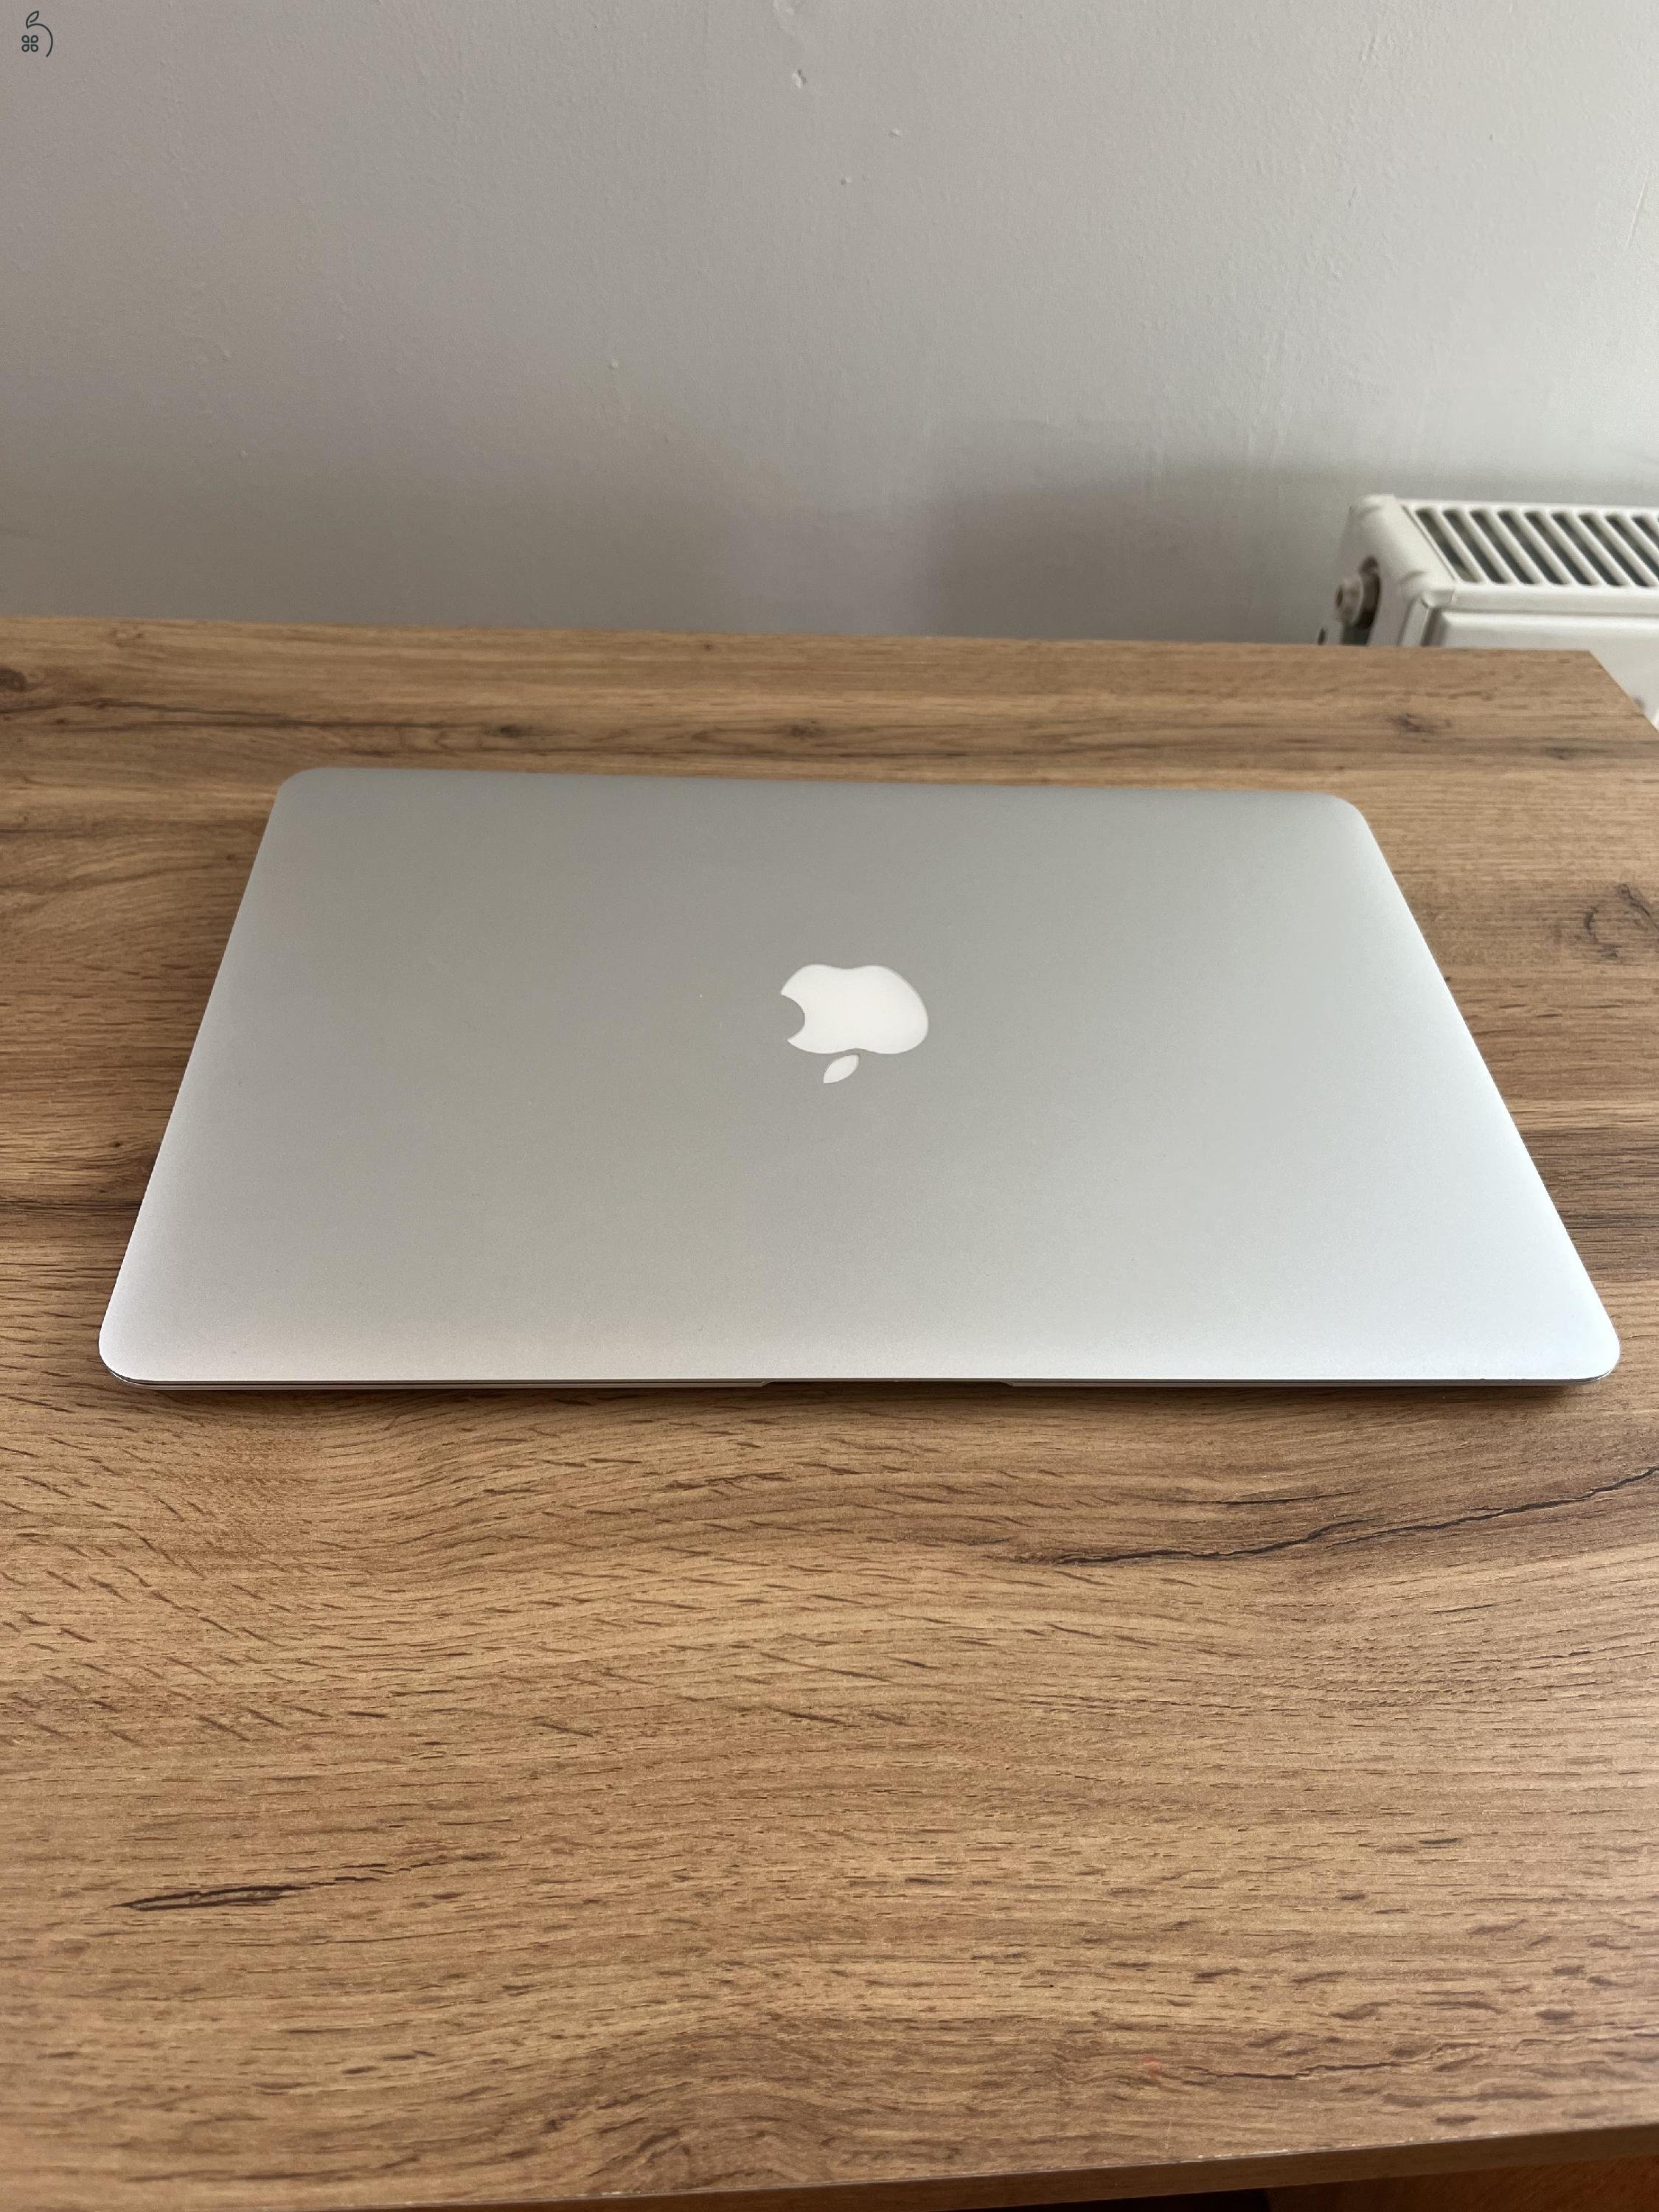 MacBook Air (13-inch, 2017) 128gb